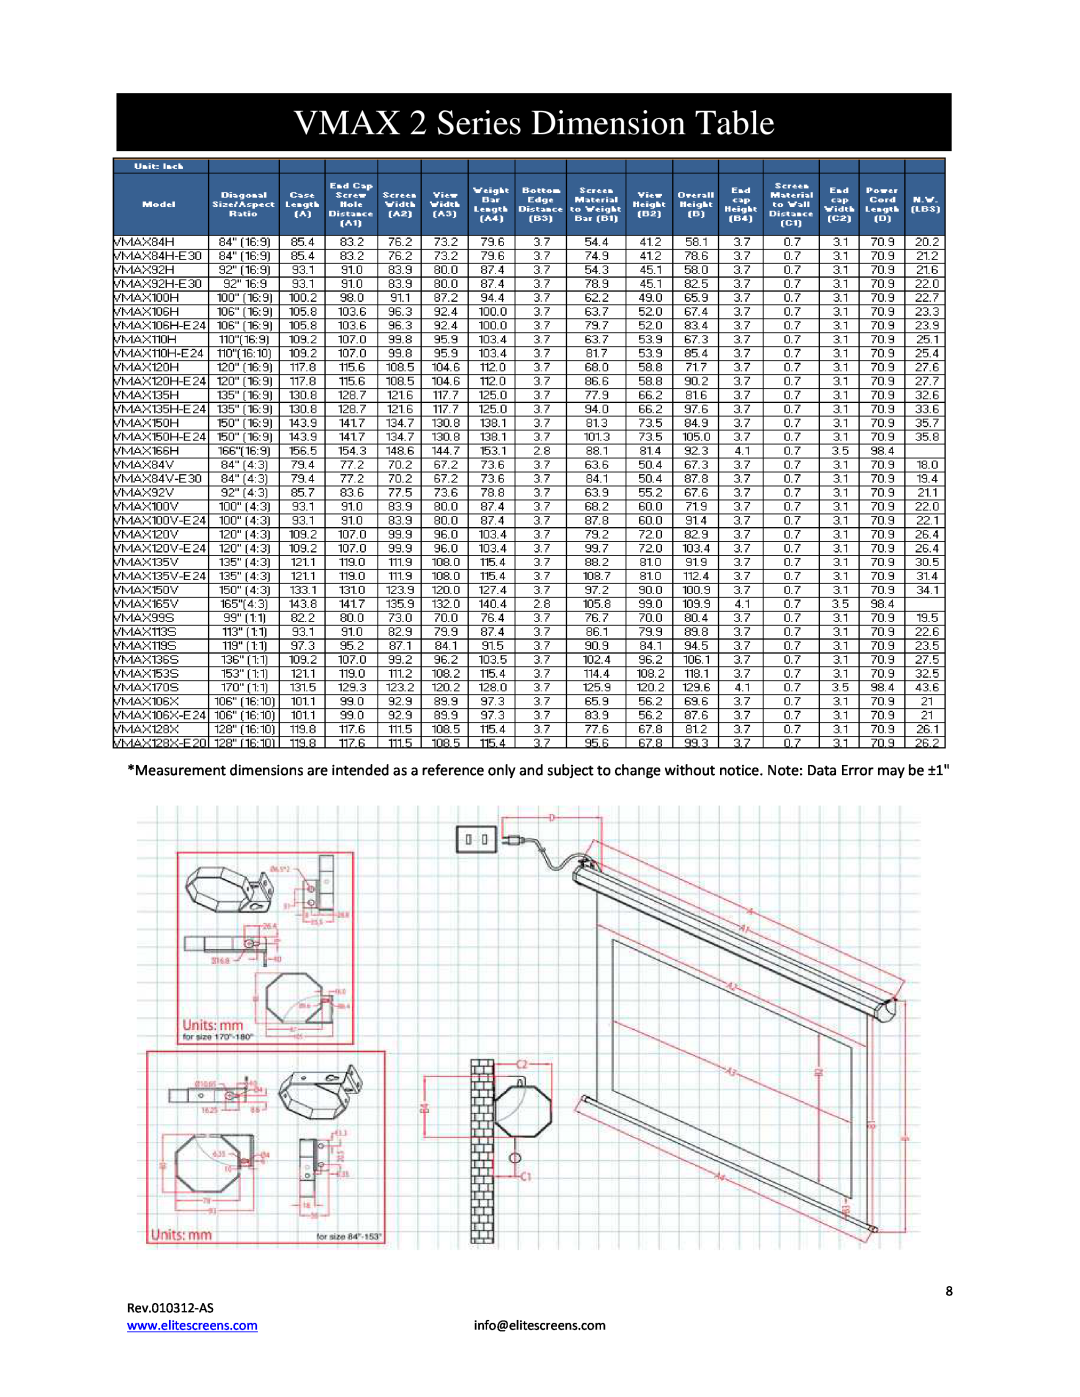 Elite Screens VMAX2 manual VMAX 2 Series Dimension Table, Rev.010312-AS, info@elitescreens.com 